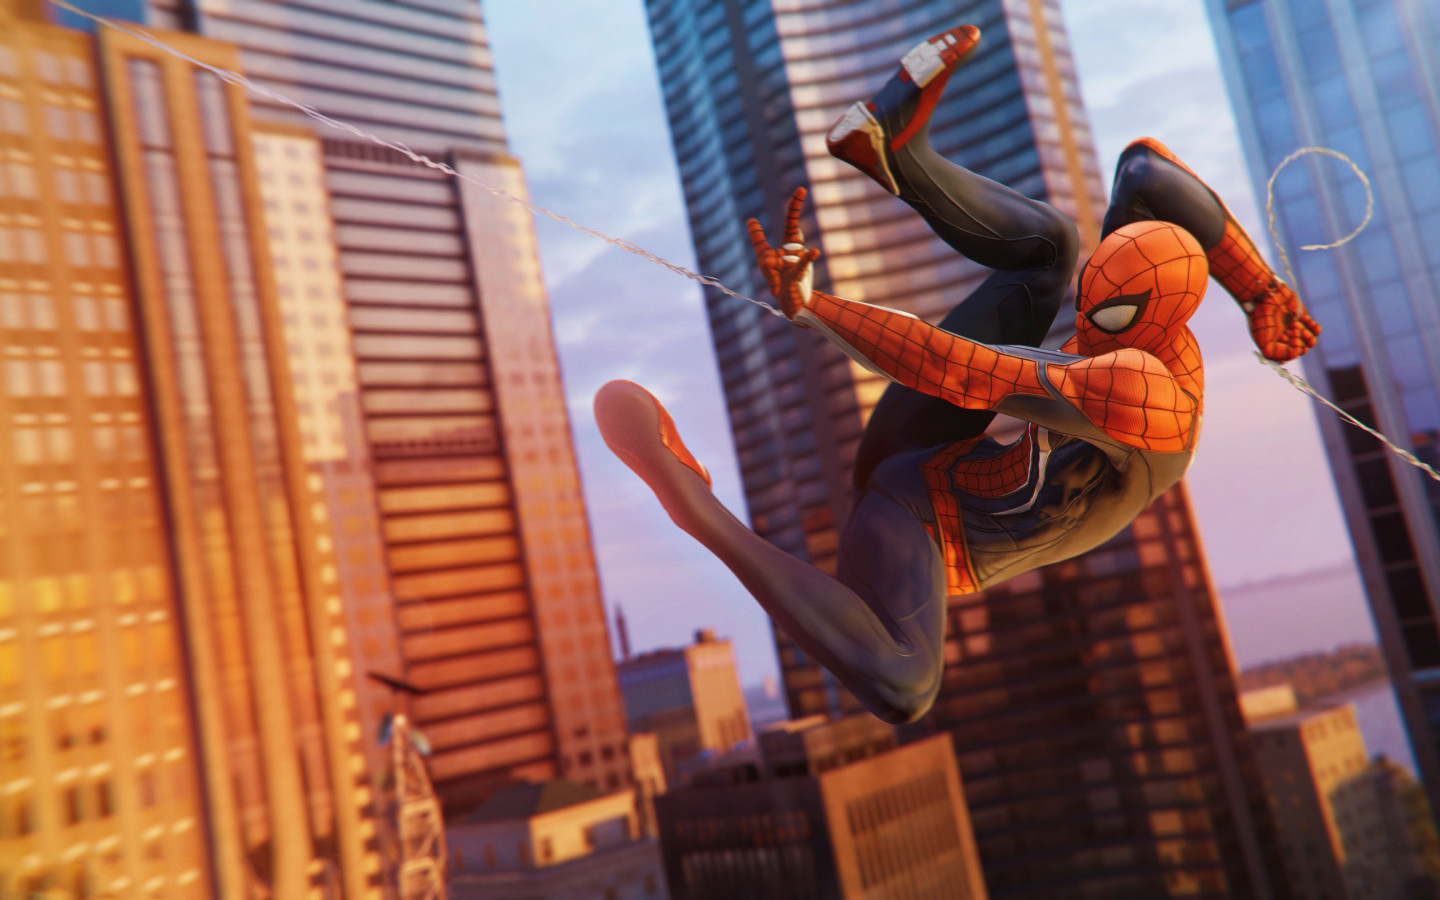 Spider Man 2018 Poster wallpaper 1440x900